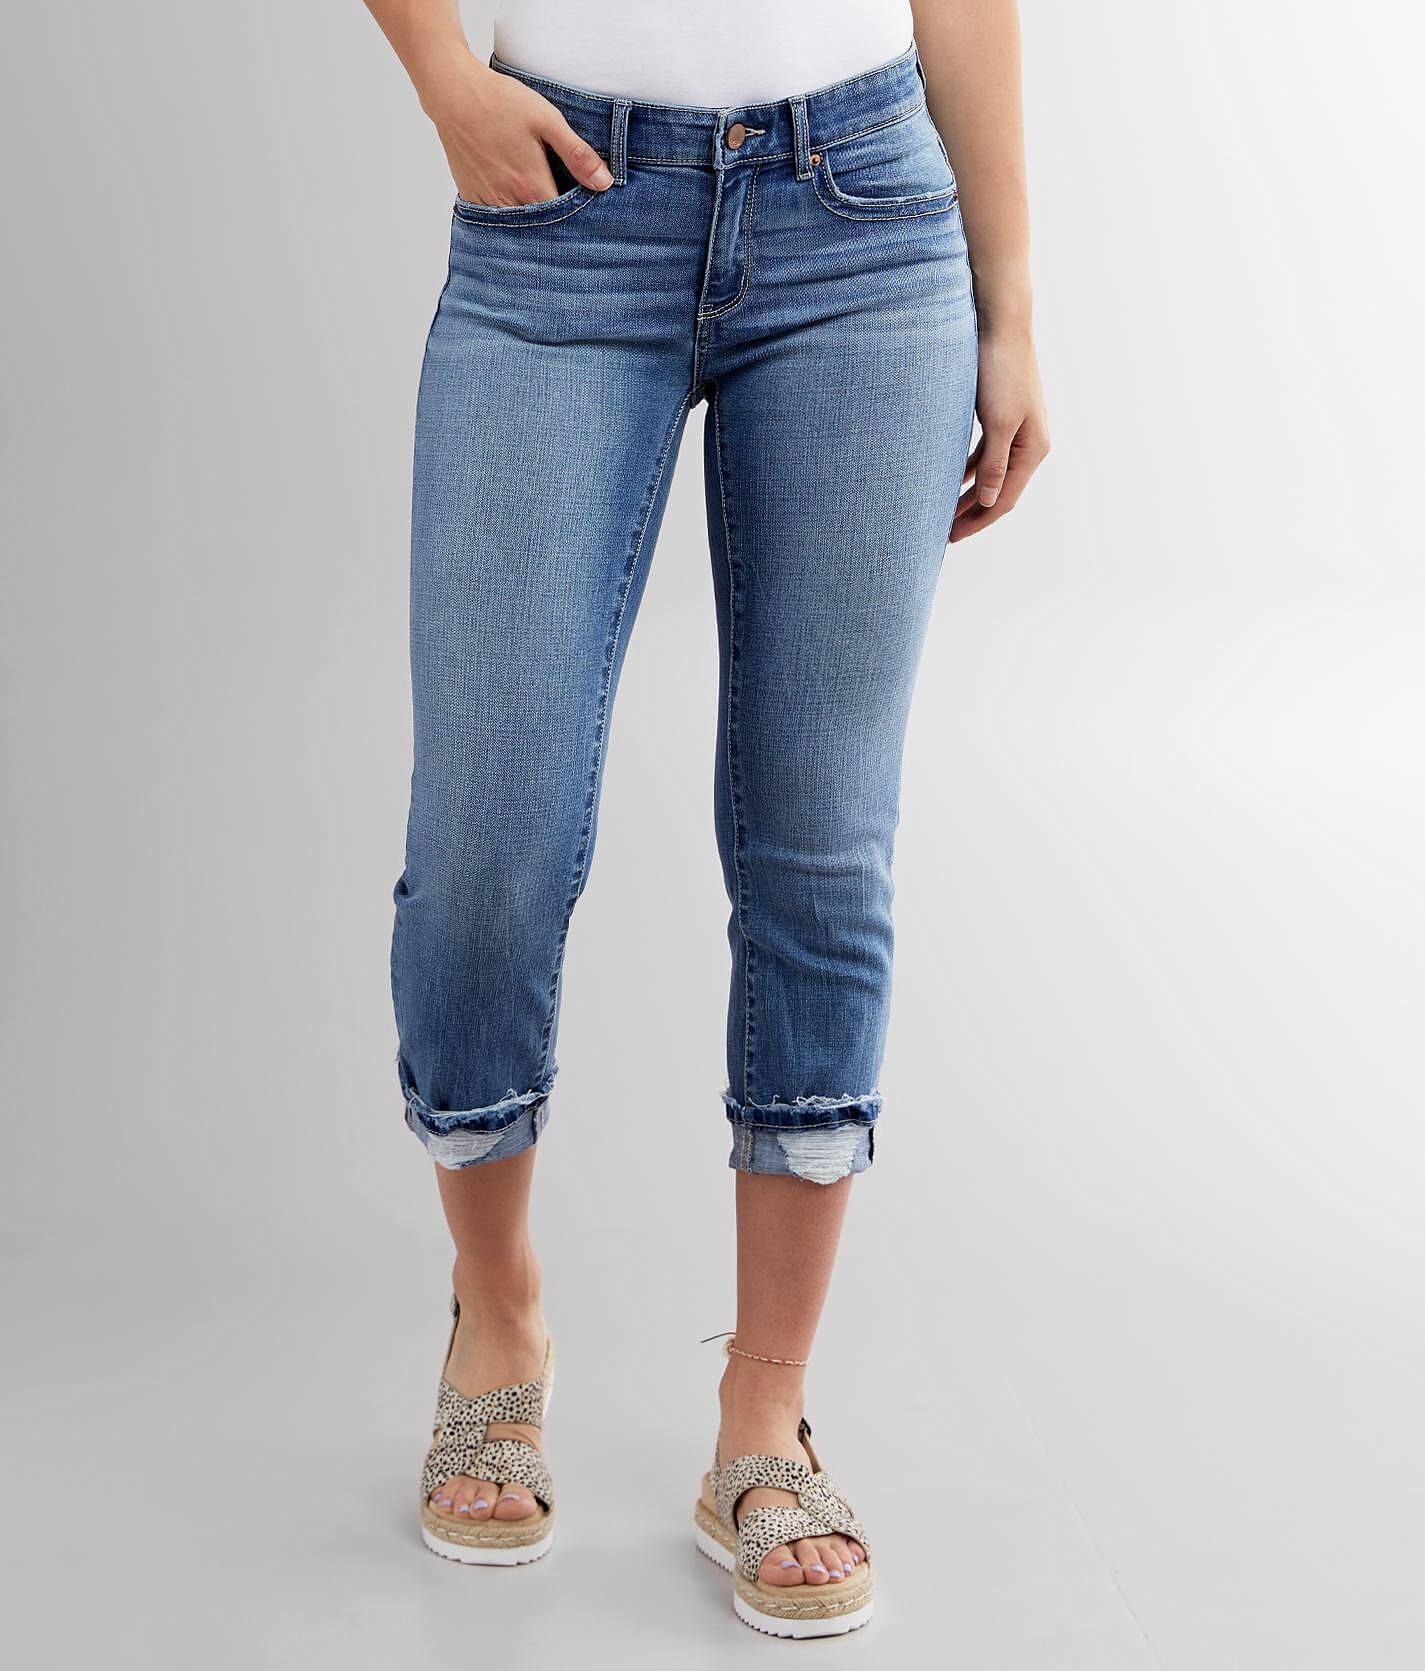 women's stretch capri jeans